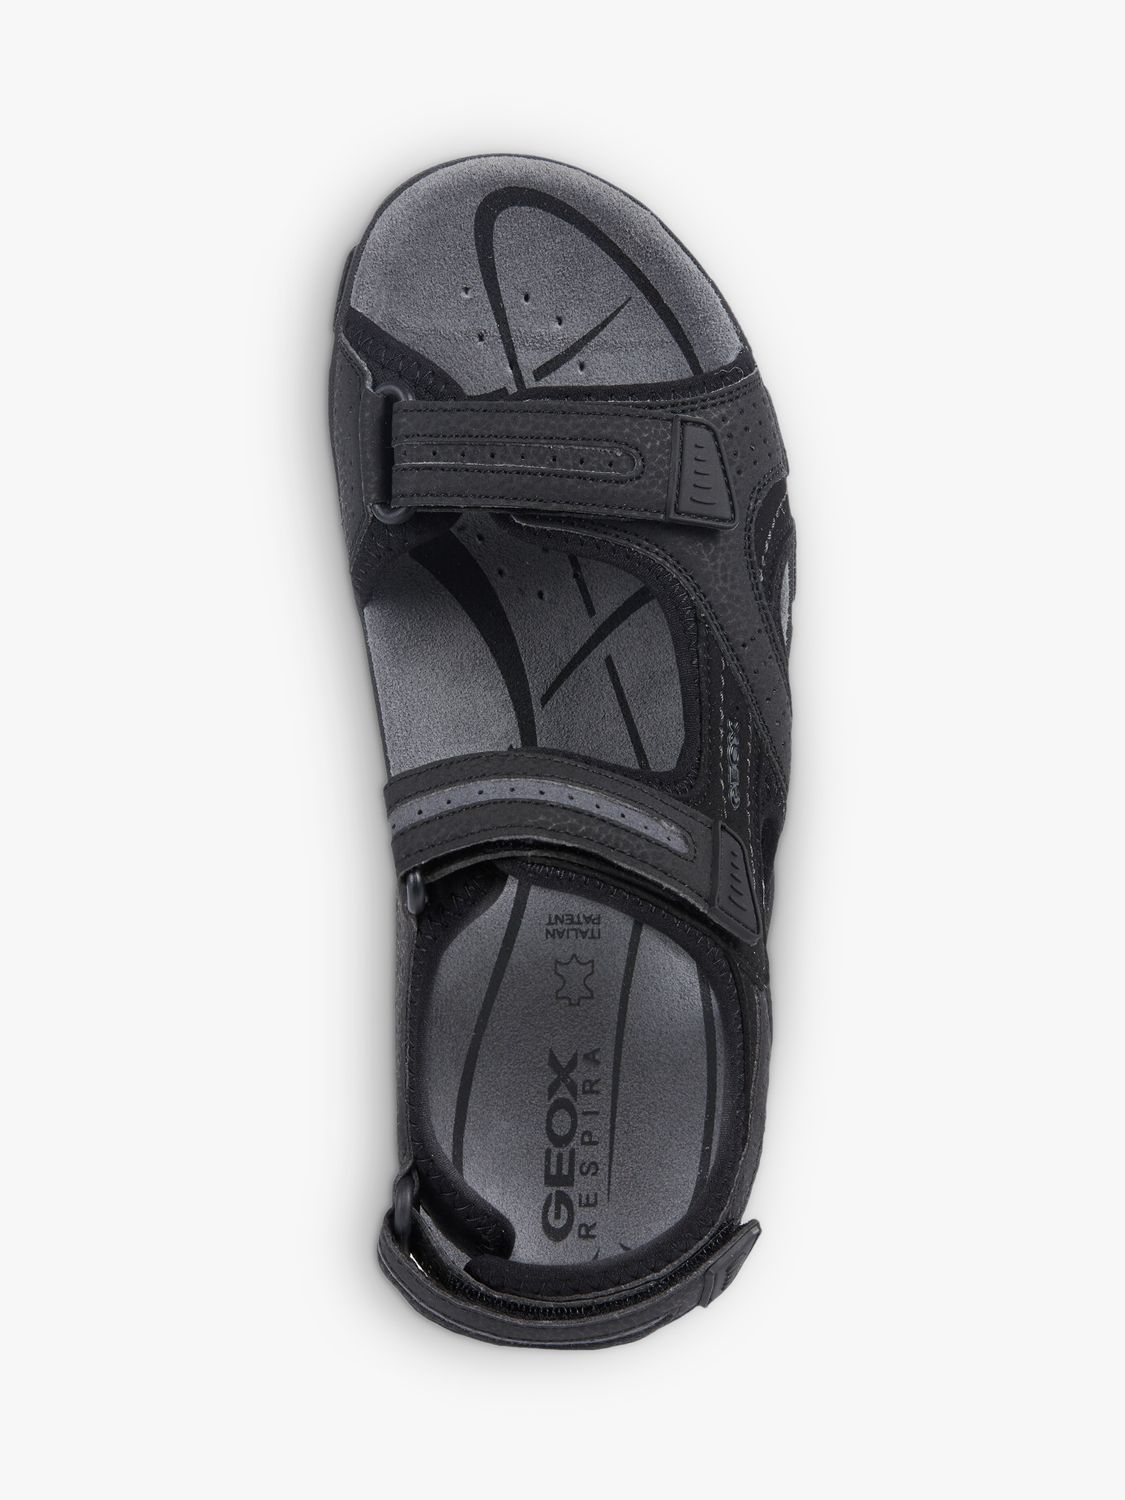 Geox Strada Sandals, Black/Stone, 6.5